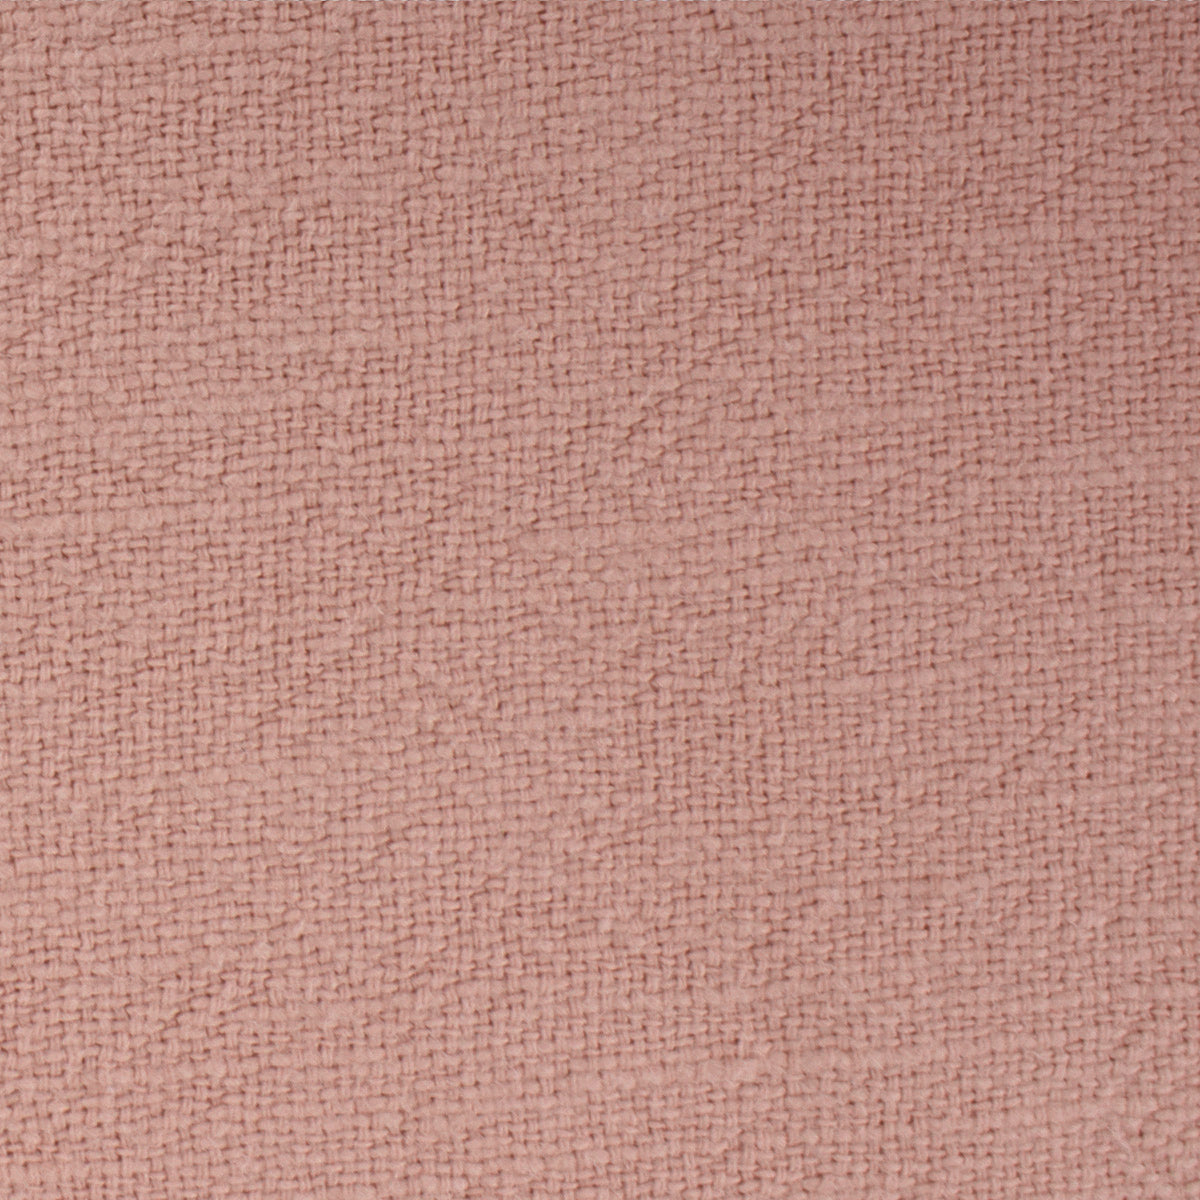 New York Dusty Nude Pink Linen Skinny Tie Fabric